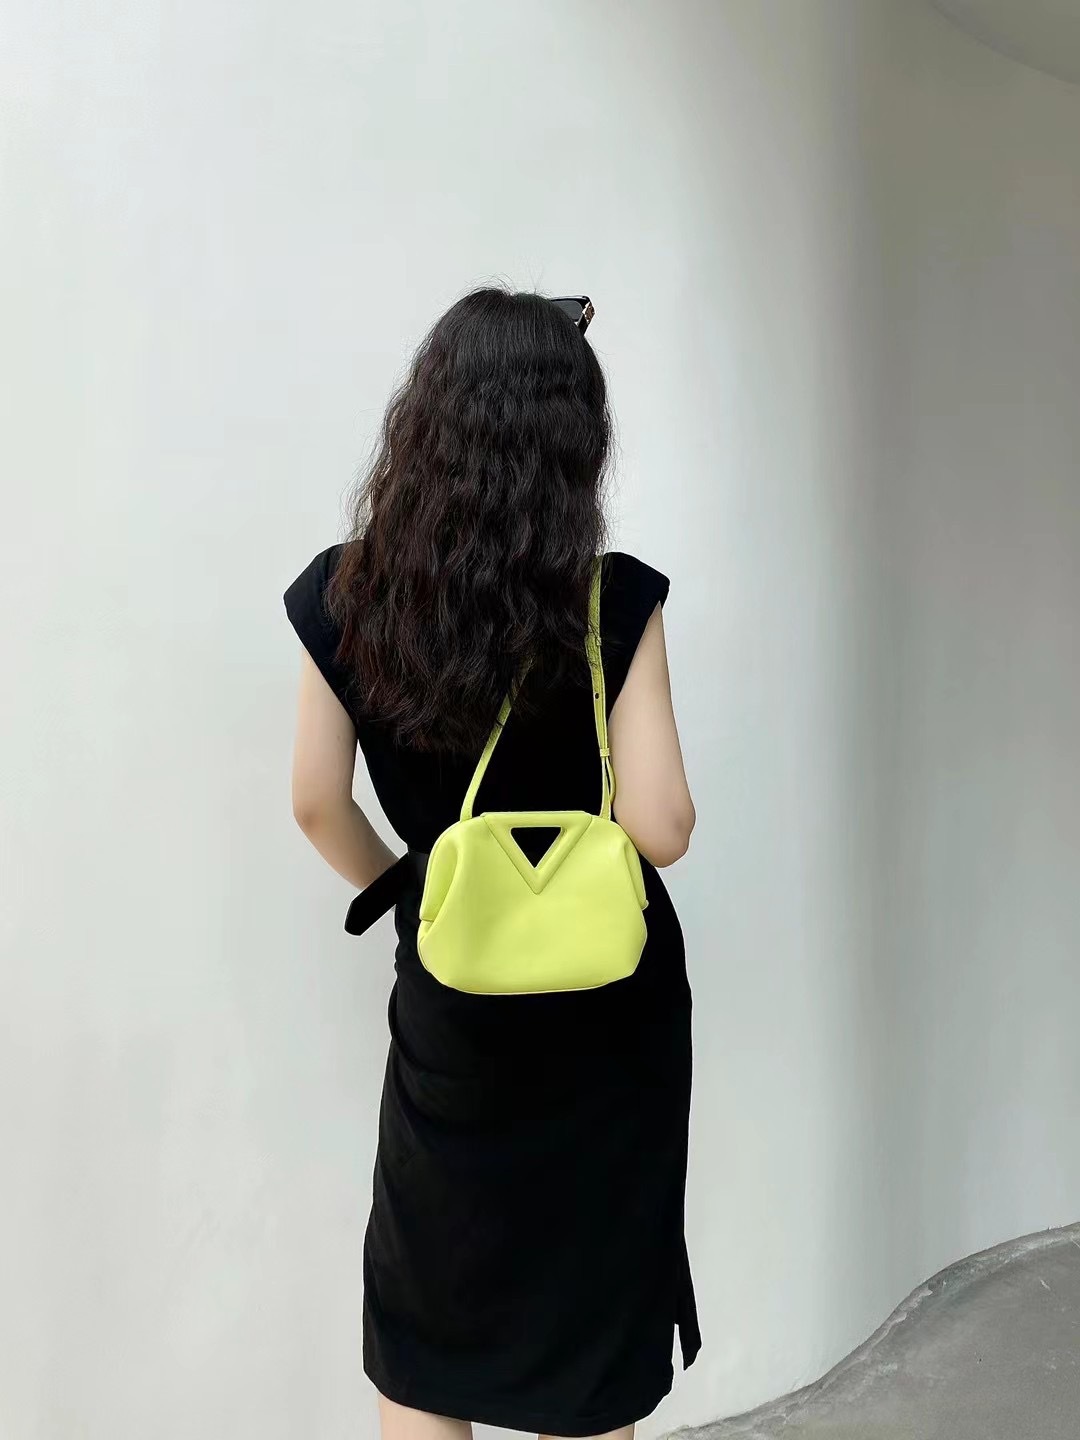 New Cloud Bag Hand-held Mini One-shoulder Diagonal Bag B Inverted Triangle Bag Dumpling Bag Women's Bag Pleated Small Square Bag